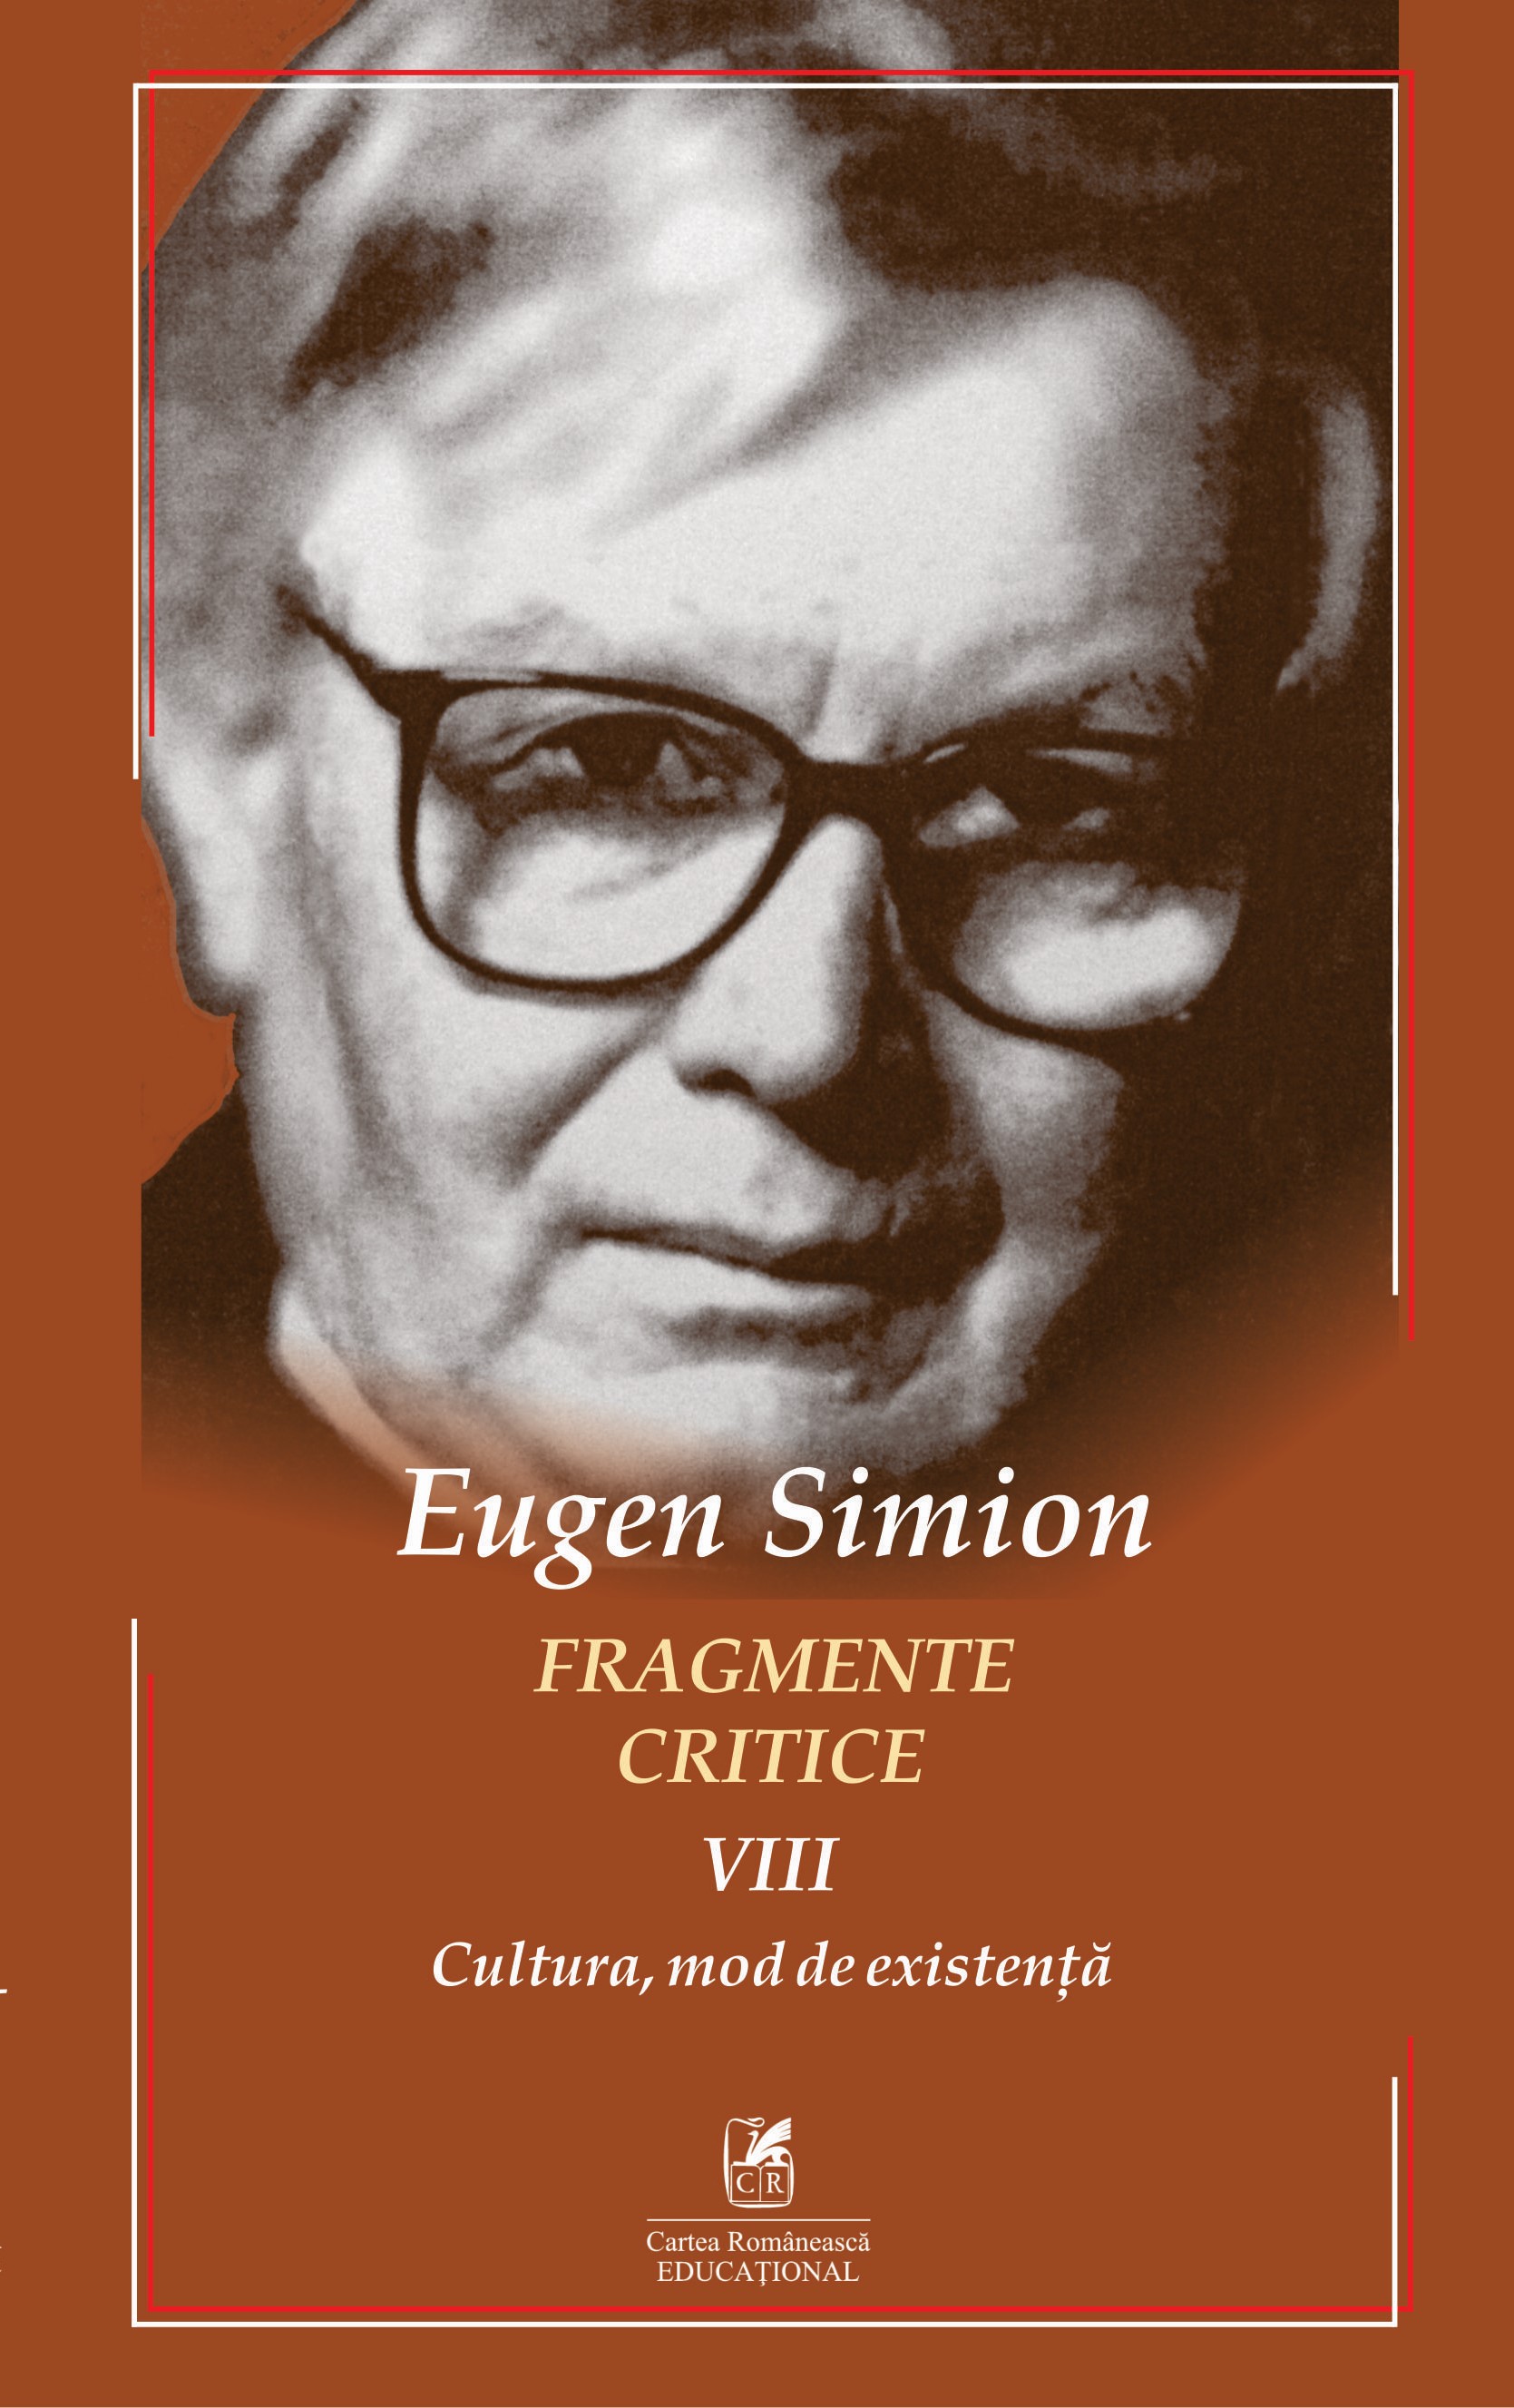 Fragmente critice, volumul VIII: Cultura, mod de existenta | Eugen Simion Cartea Romaneasca educational poza bestsellers.ro